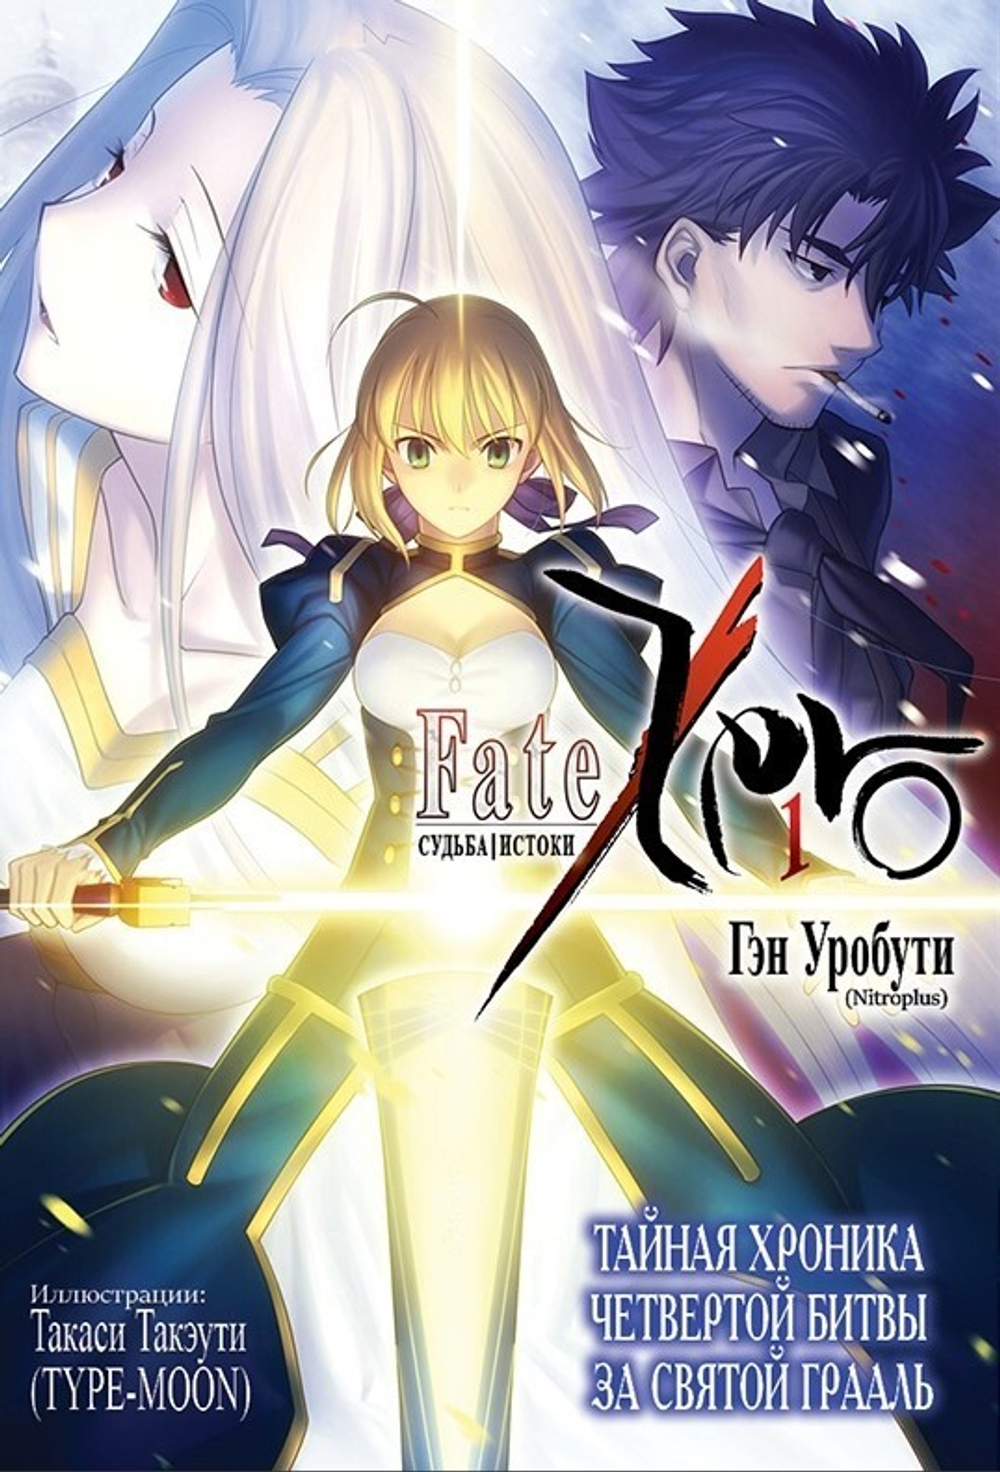 Fate/Zero || Судьба/Истоки Том. 1 (ранобэ)